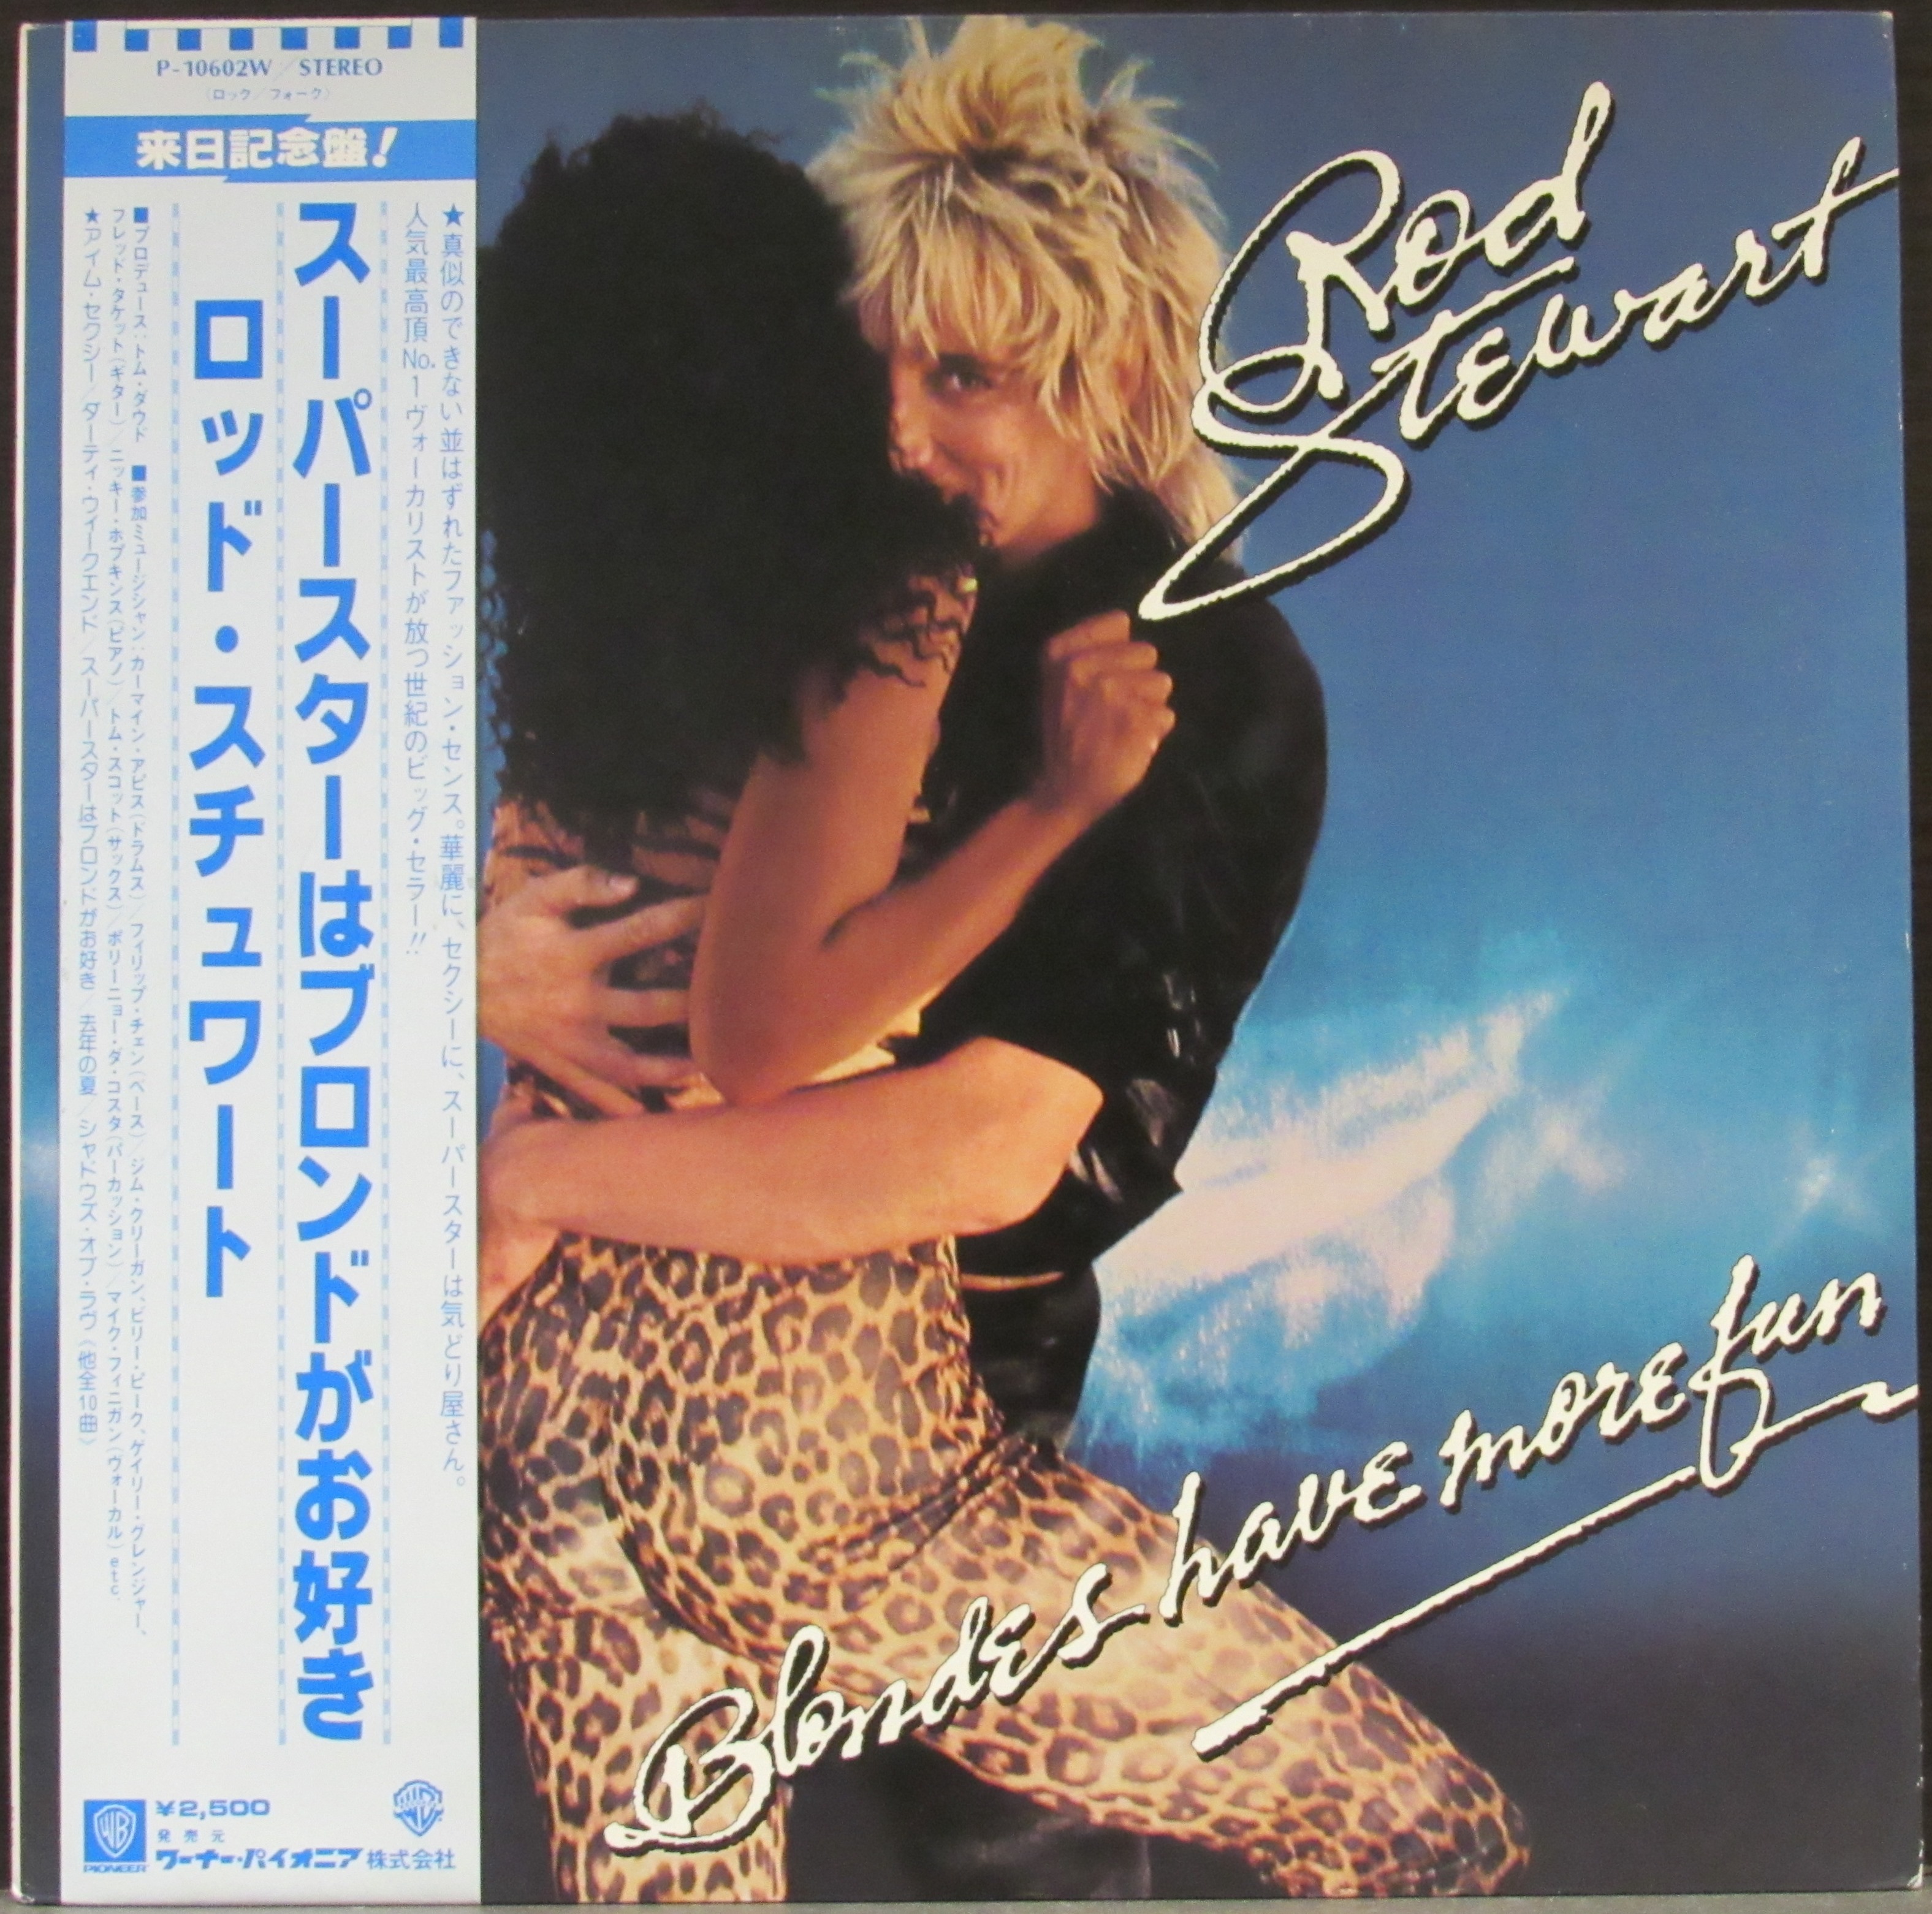 Blondes have more. Rod Stewart 1978 blondes have more fun Vinyl. Винил пластинка Rod Stewart blondes have more fun. Blondes have more fun род Стюарт. Винил Rod Stewart - 1976.